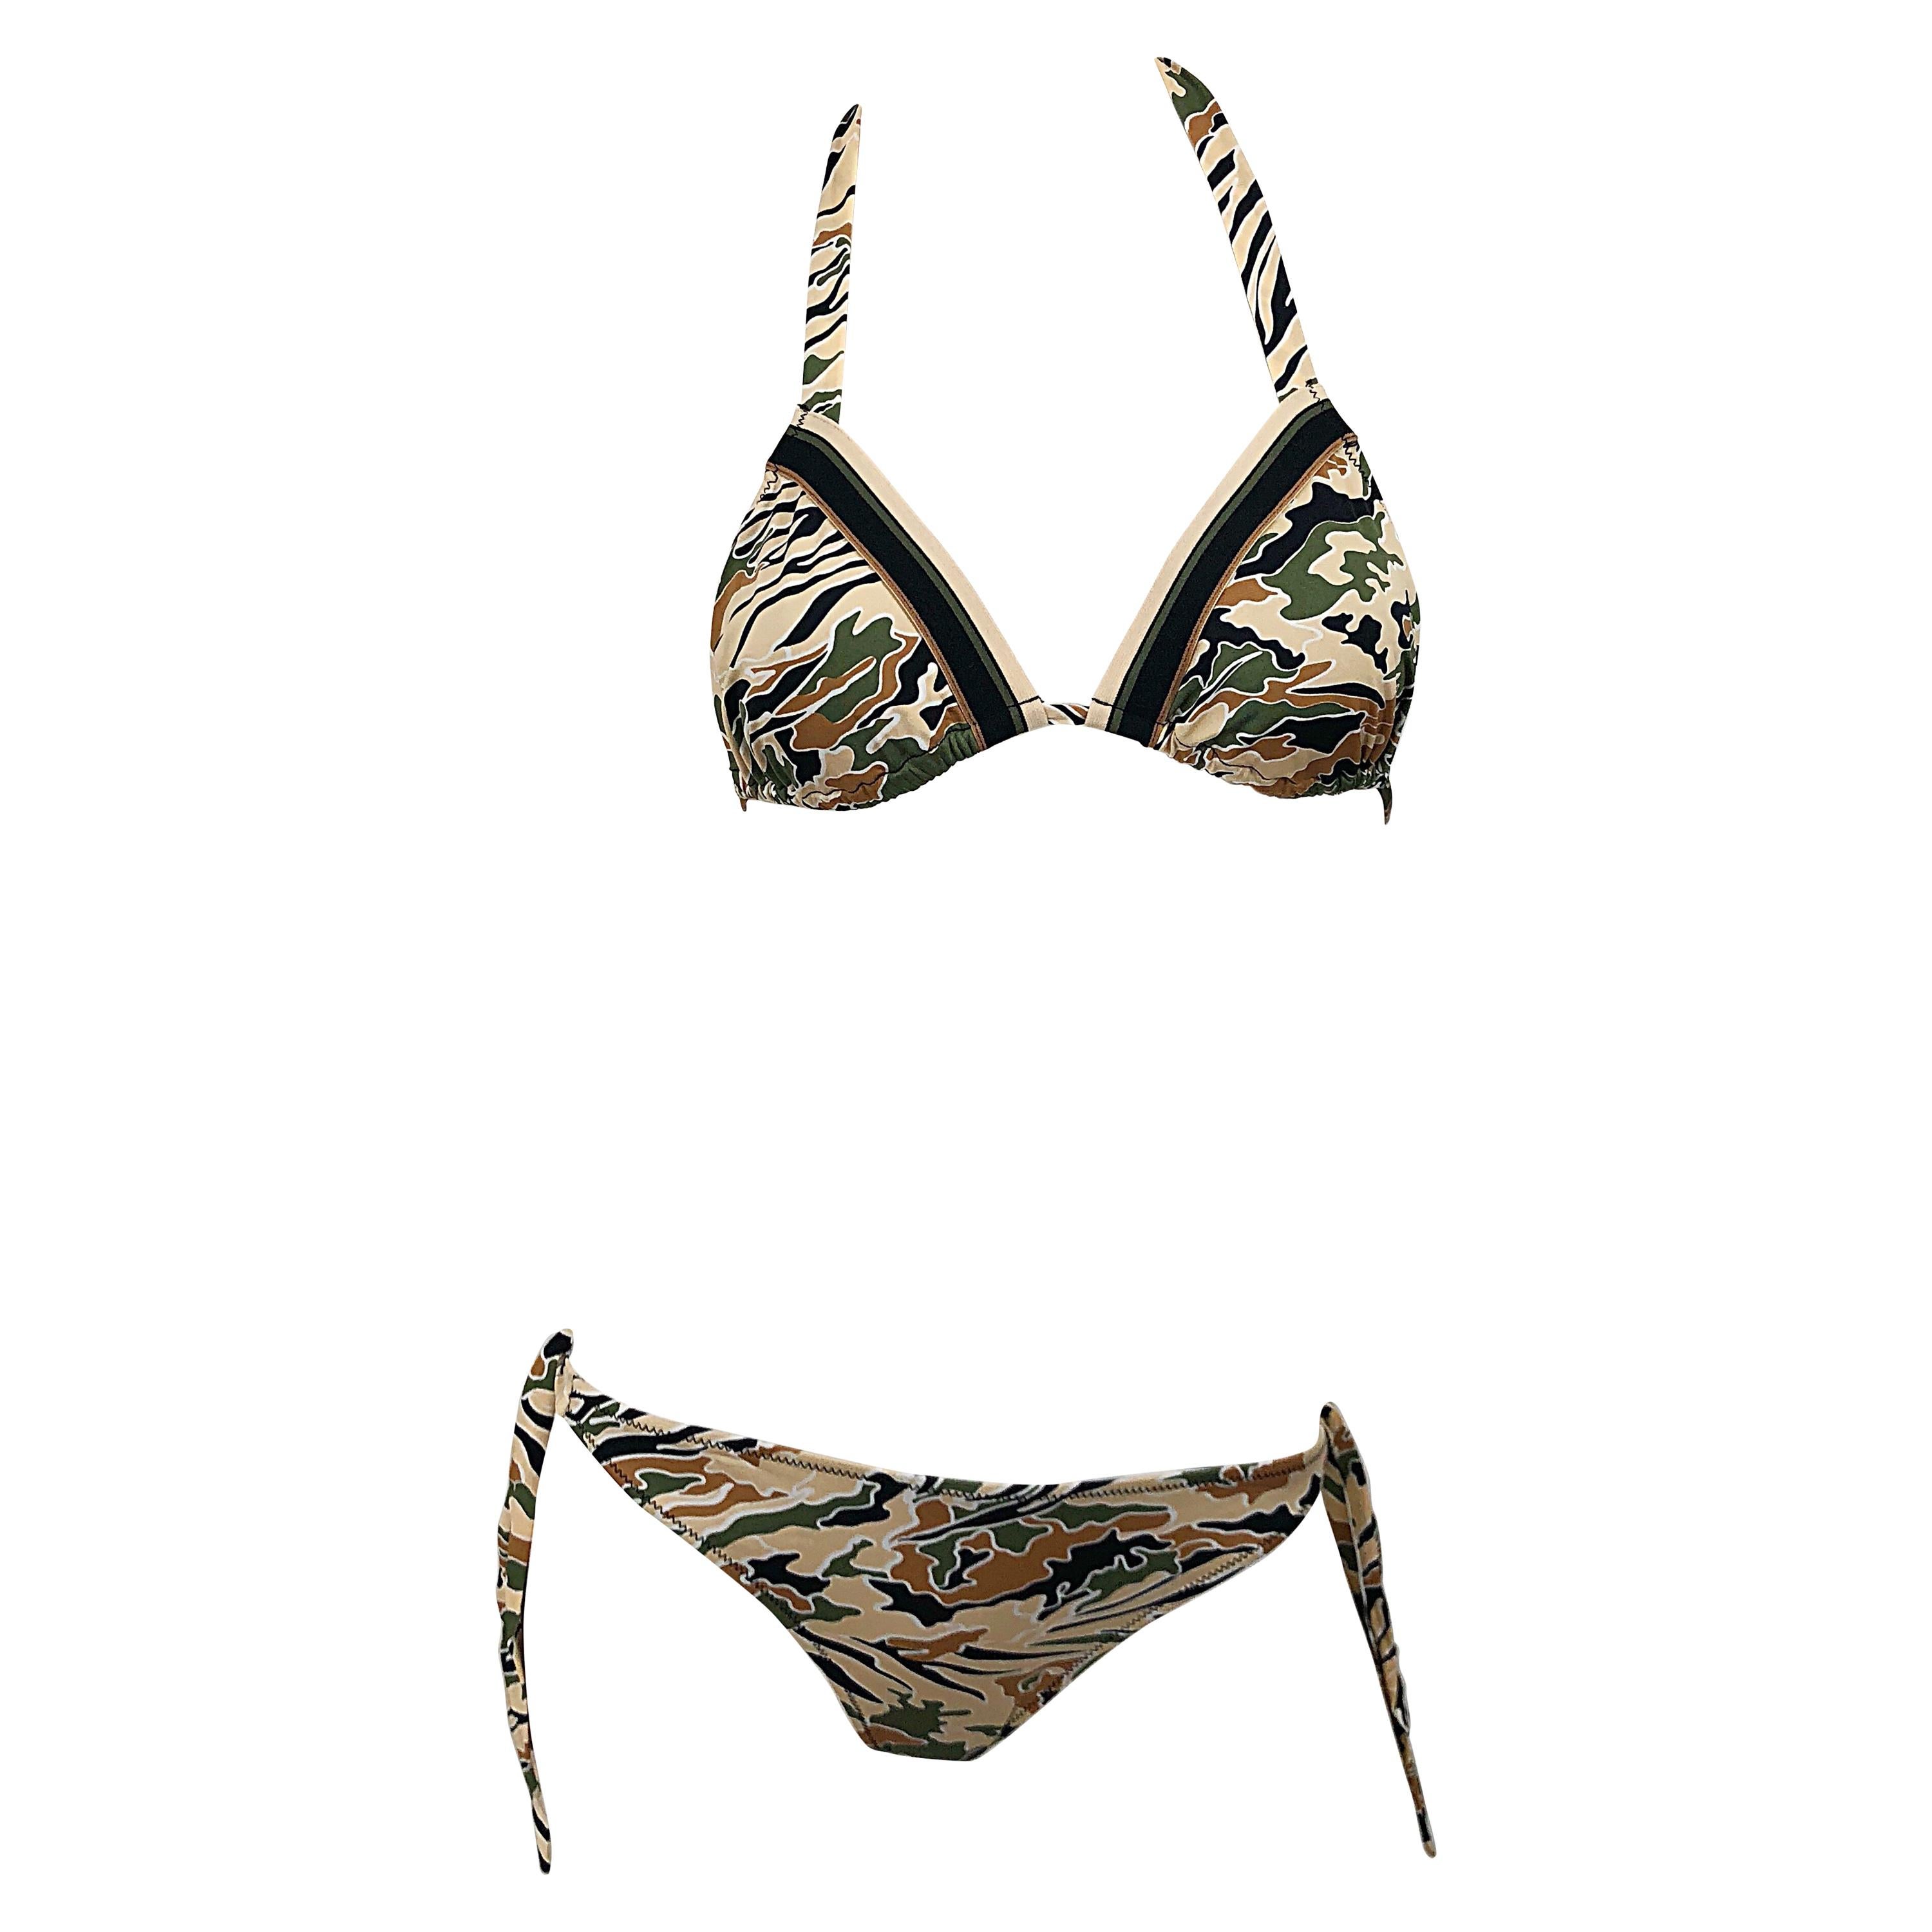 NWT La Perla Camouflage Traingle Top Low Rise Two Piece Bikini Swimsuit